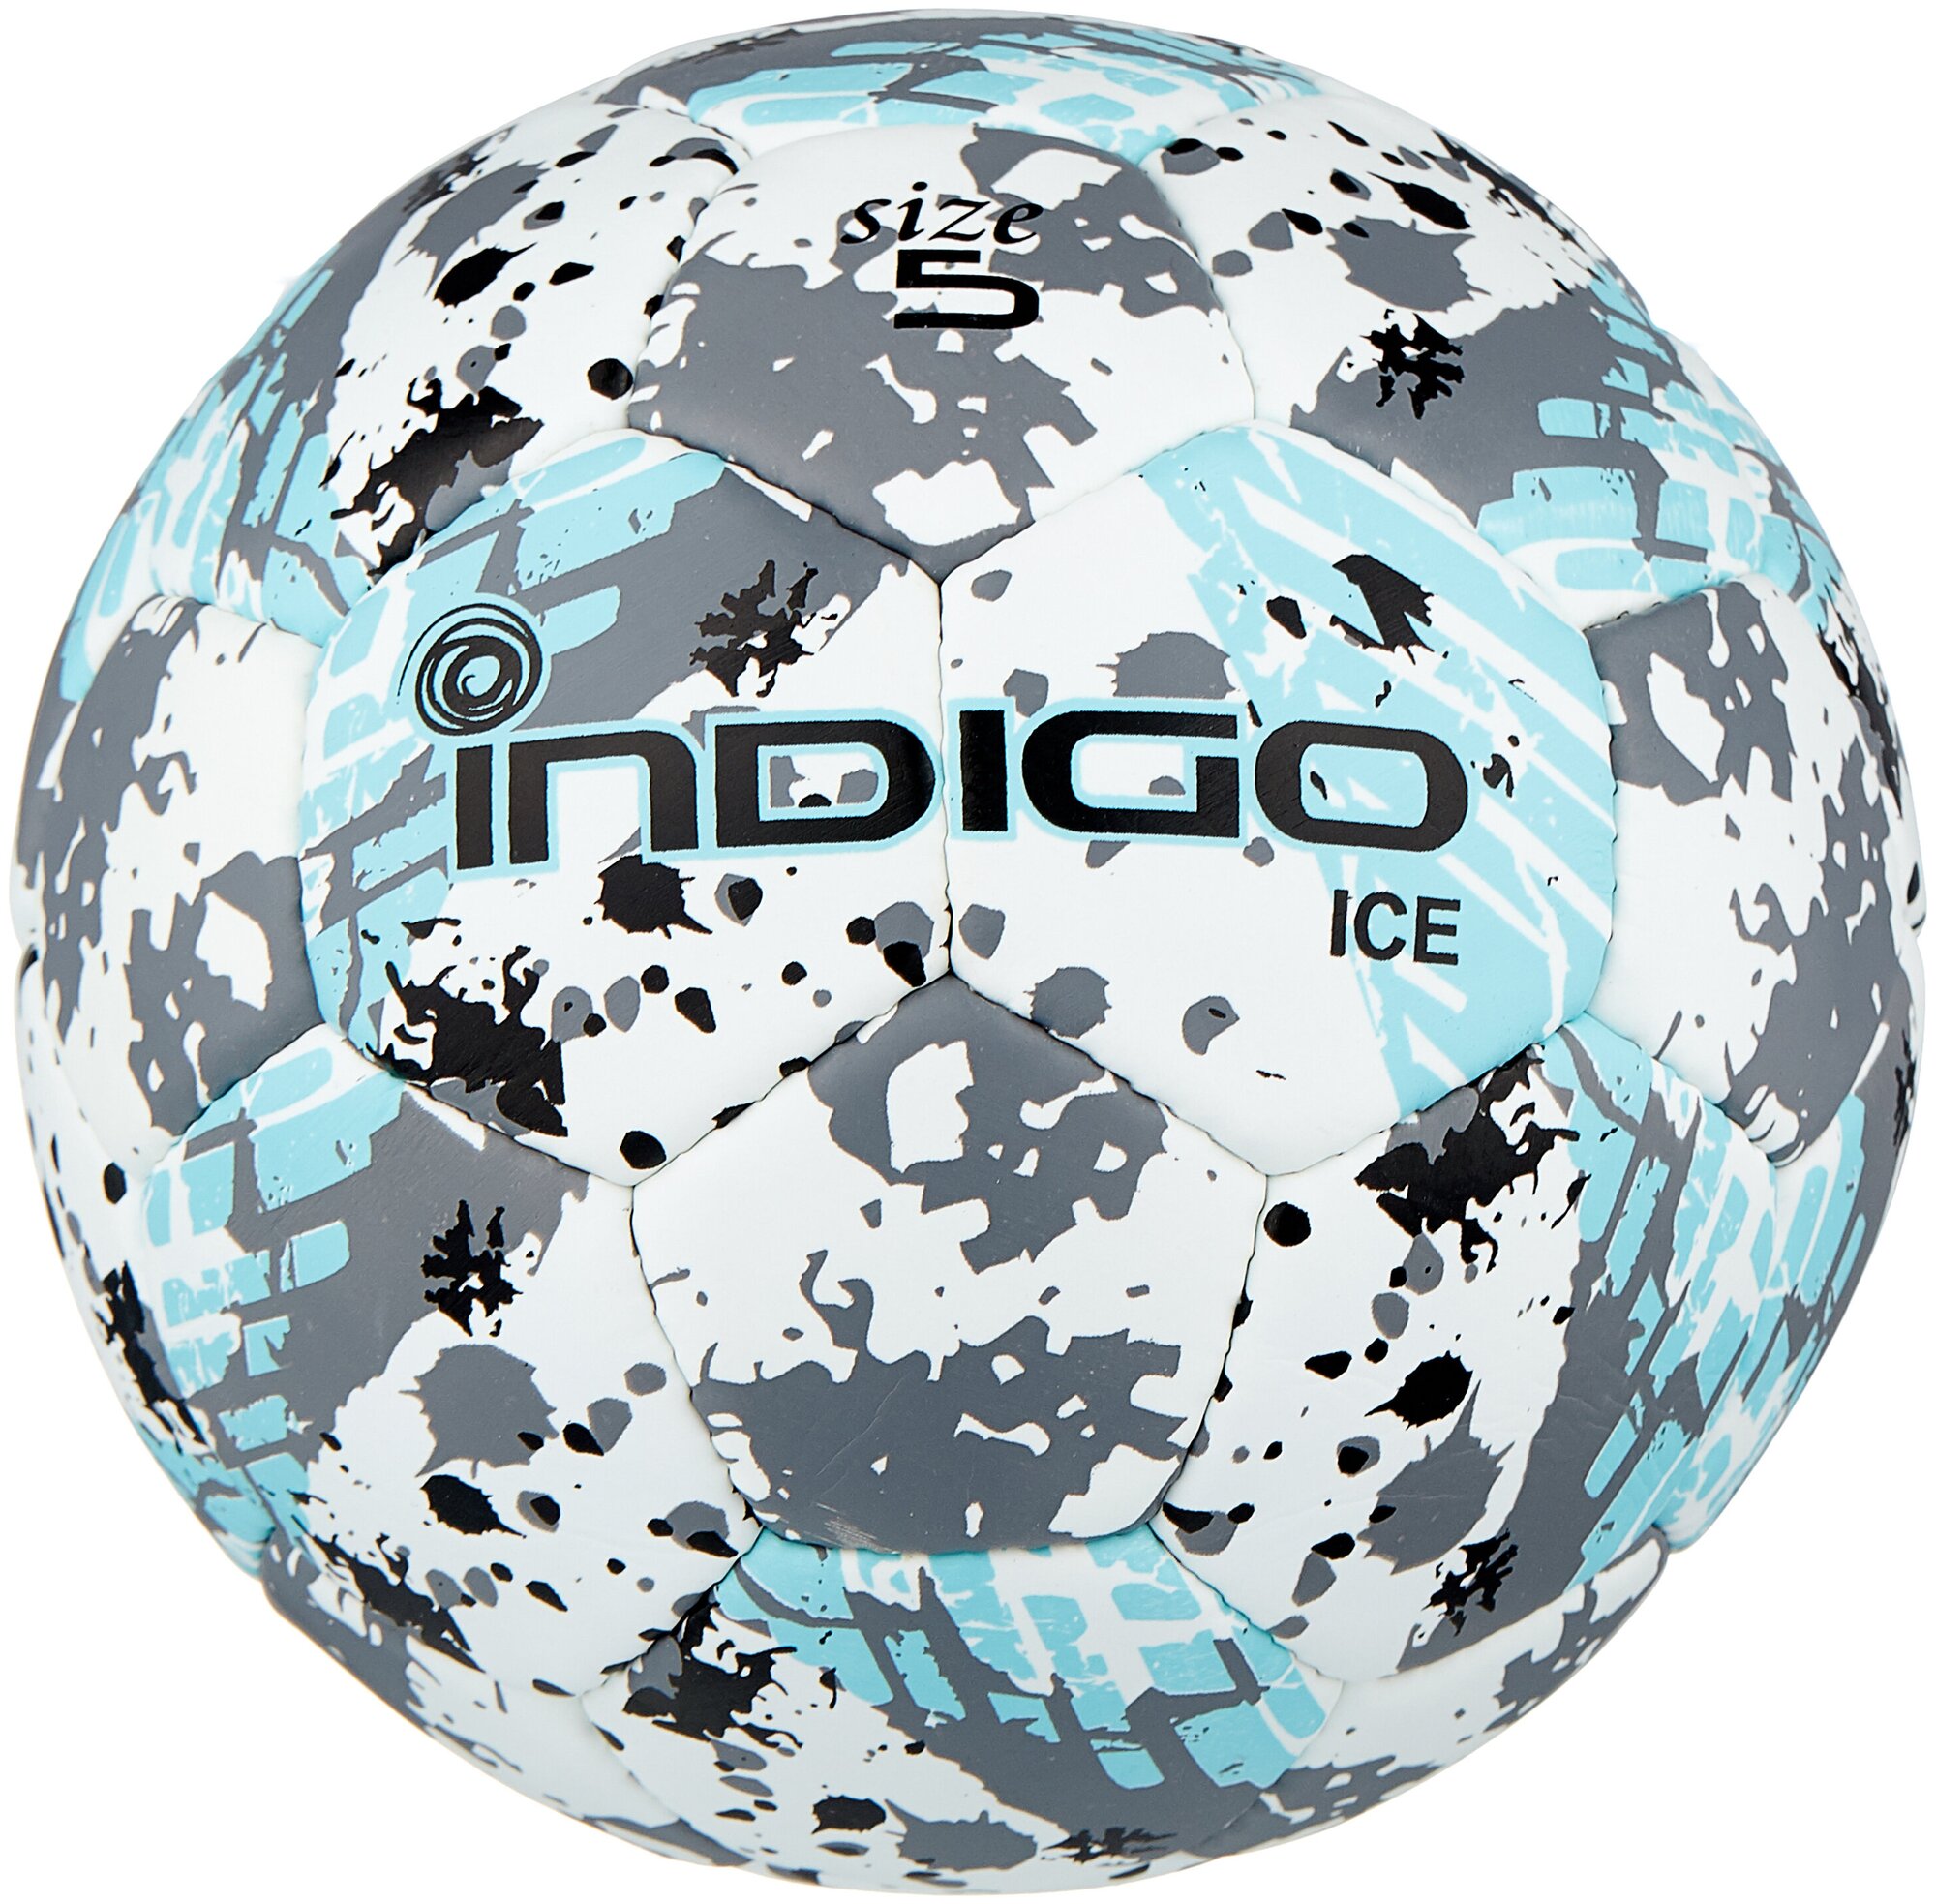   5 IN027 INDIGO ICE  (PU) --